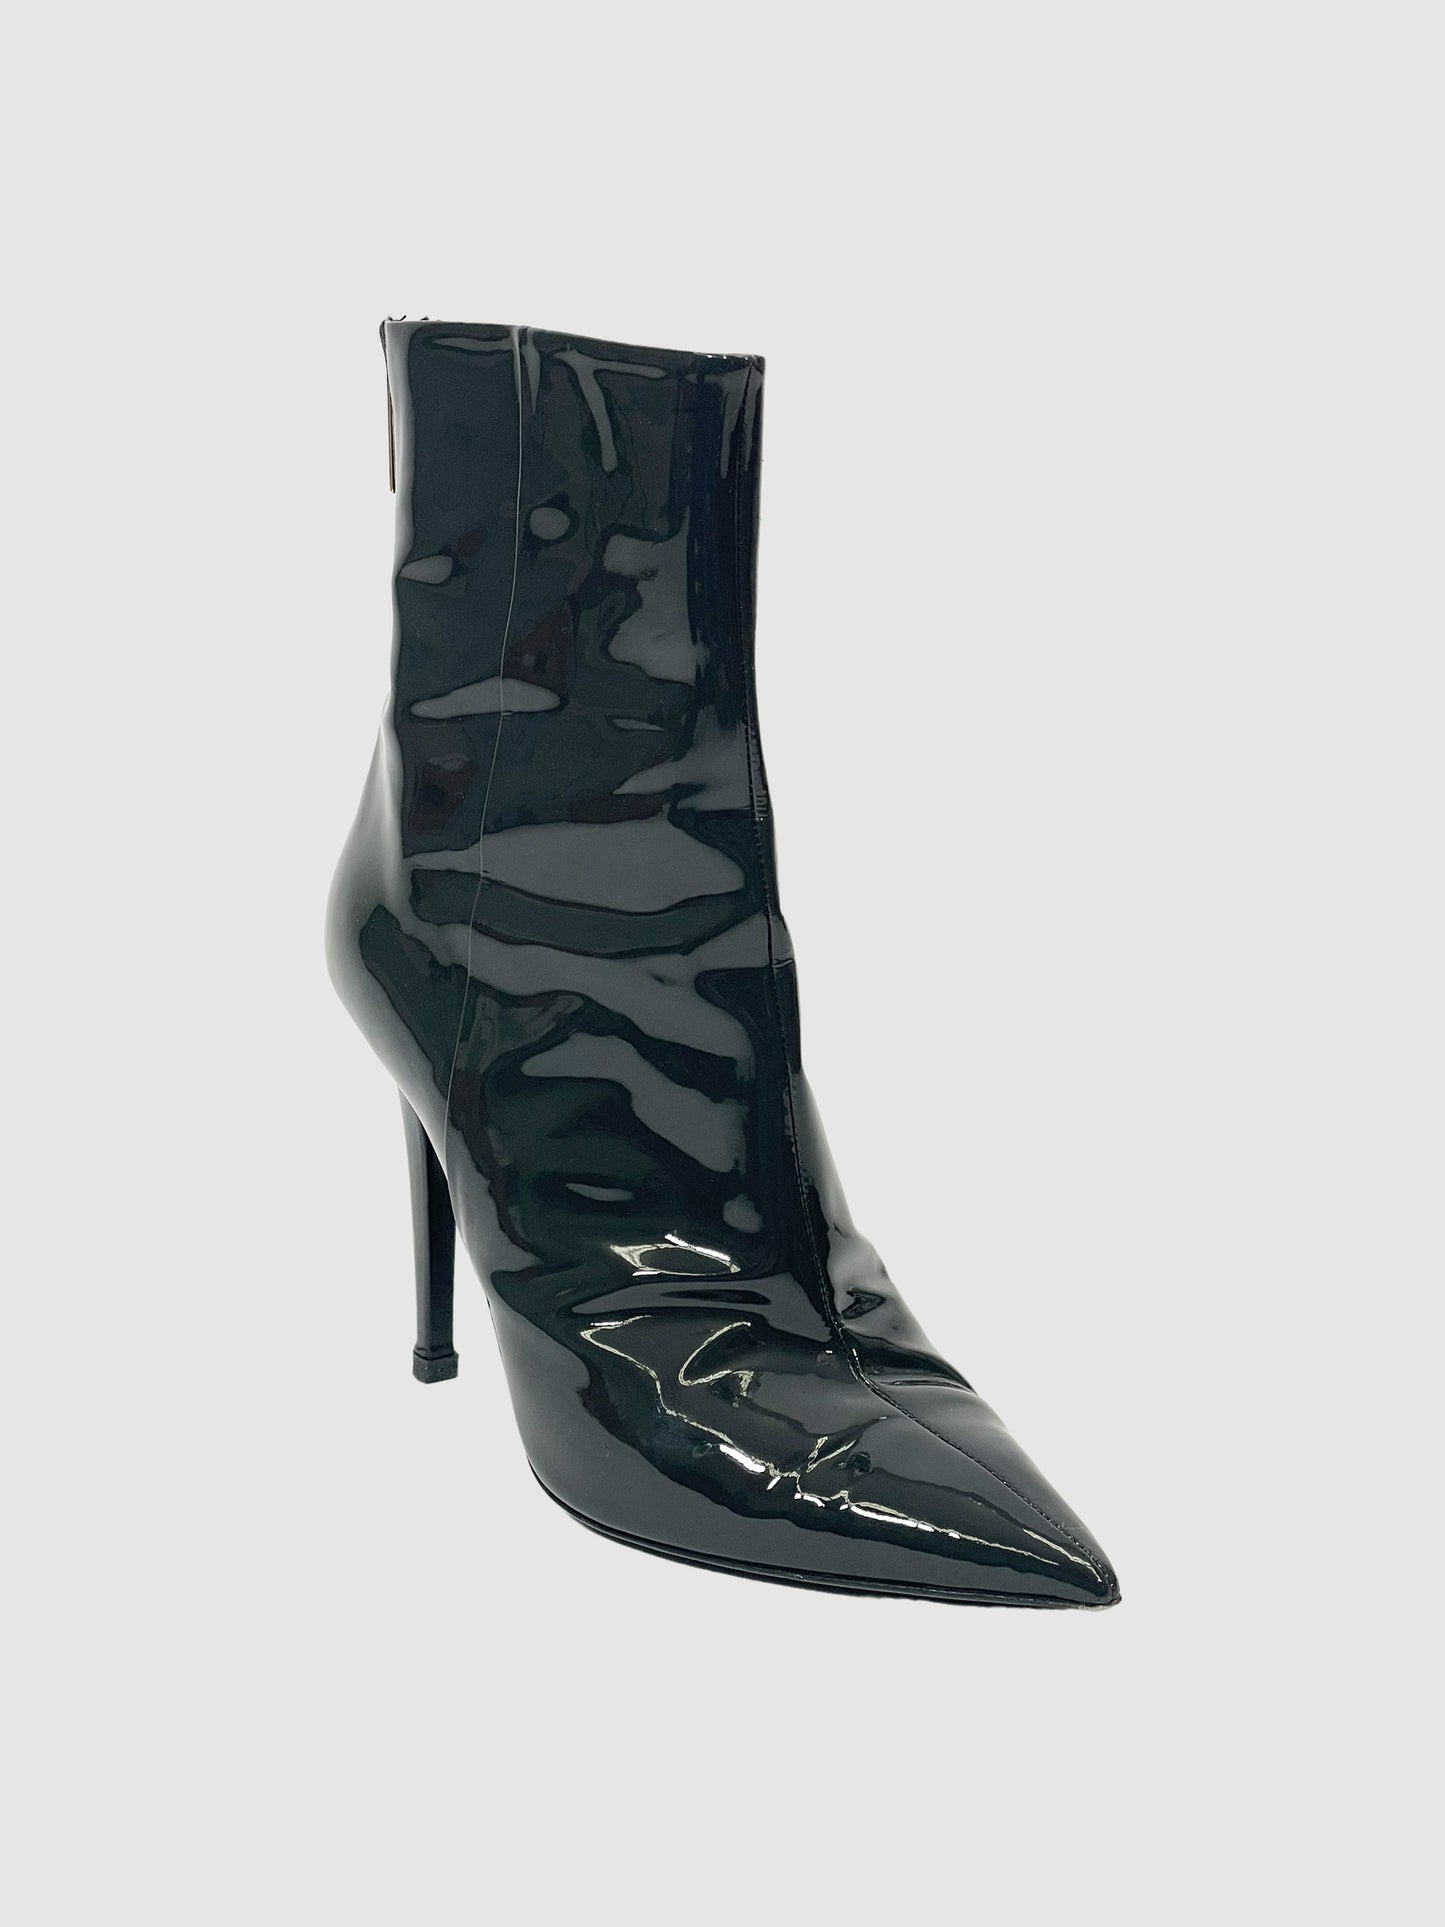 Tamara Mellon Patent Leather Stiletto Boots - Size 38.5